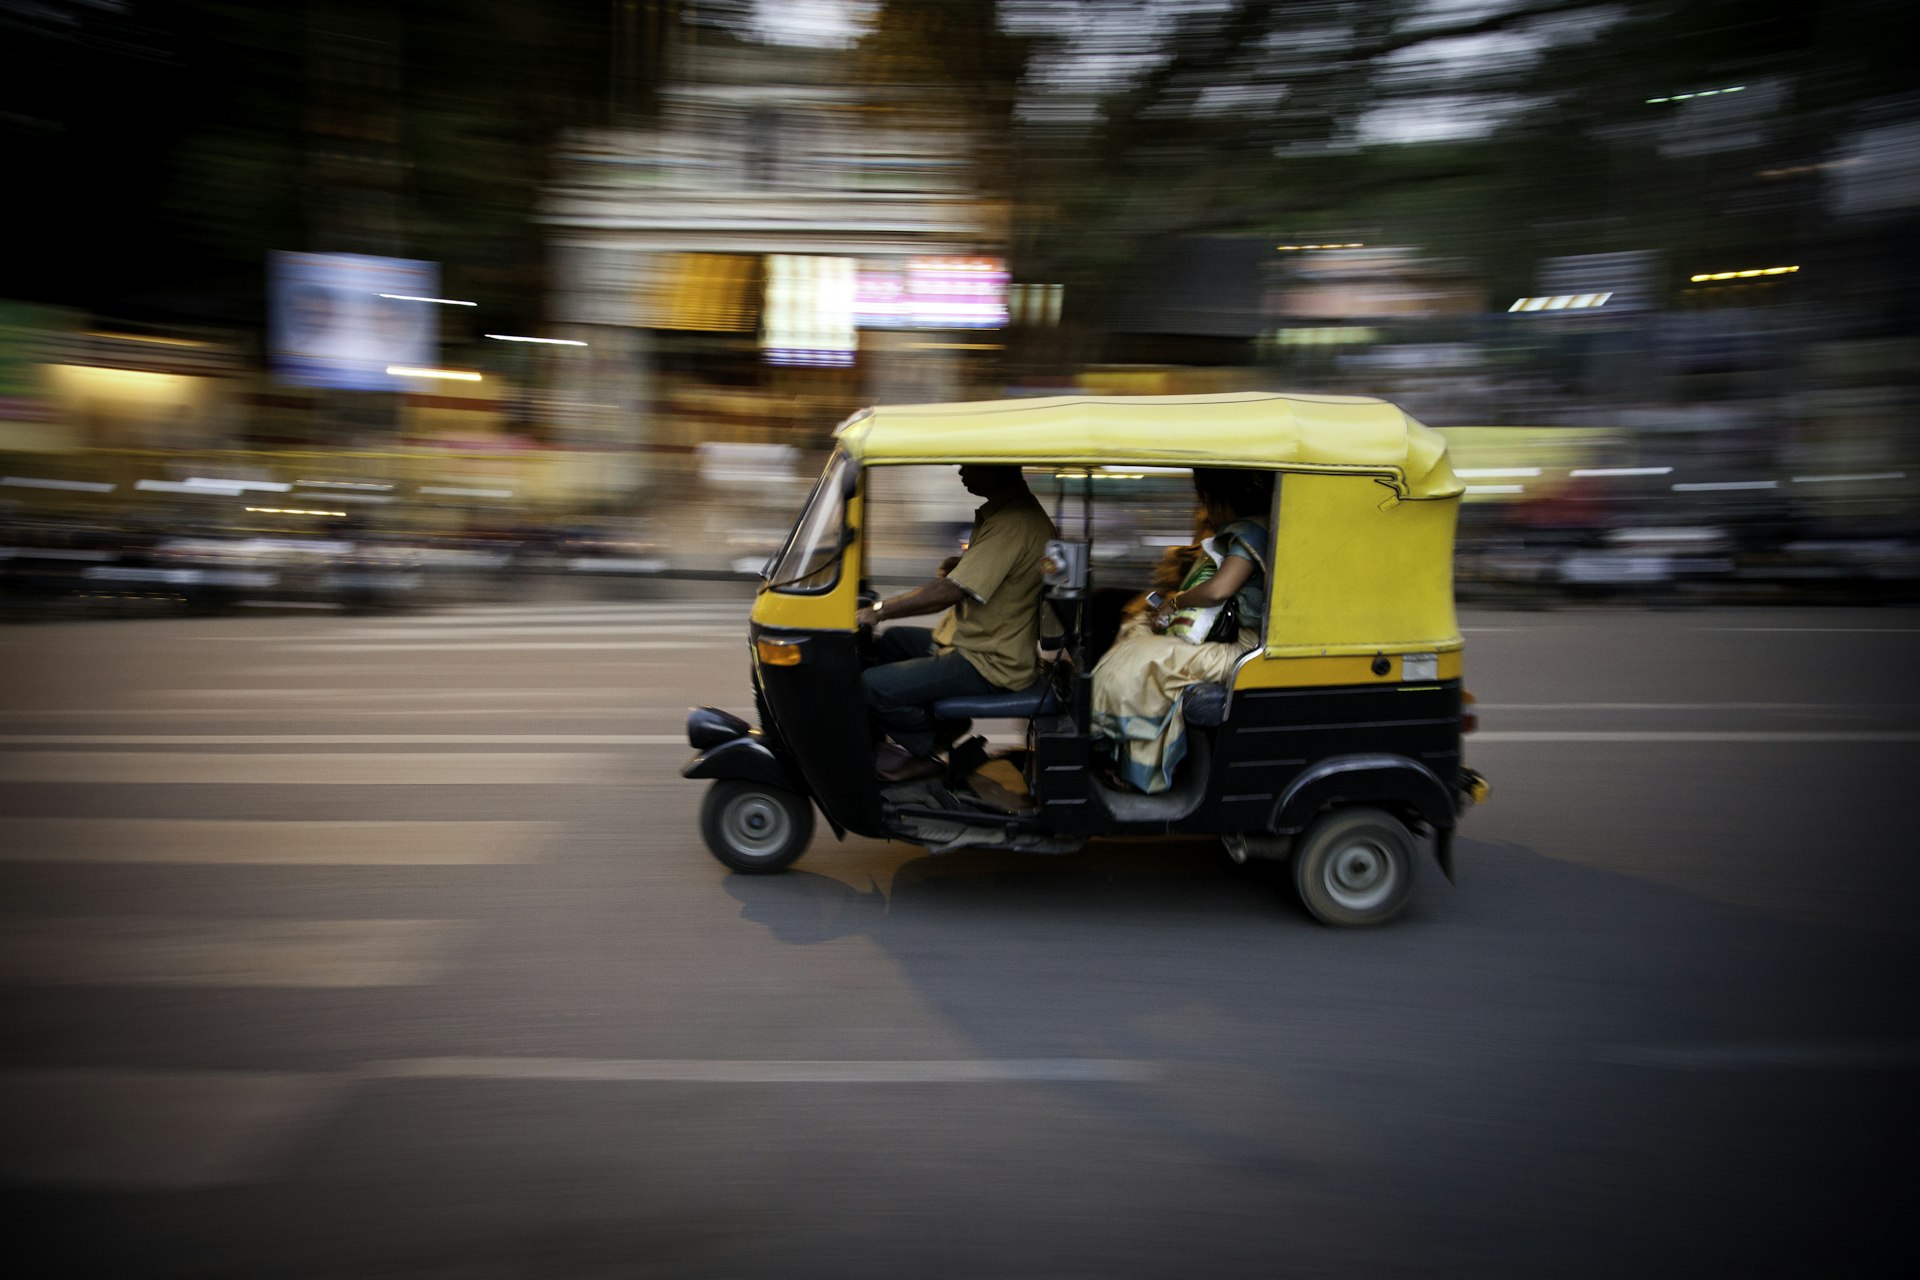 Autorickshaw at high speed on highway in India